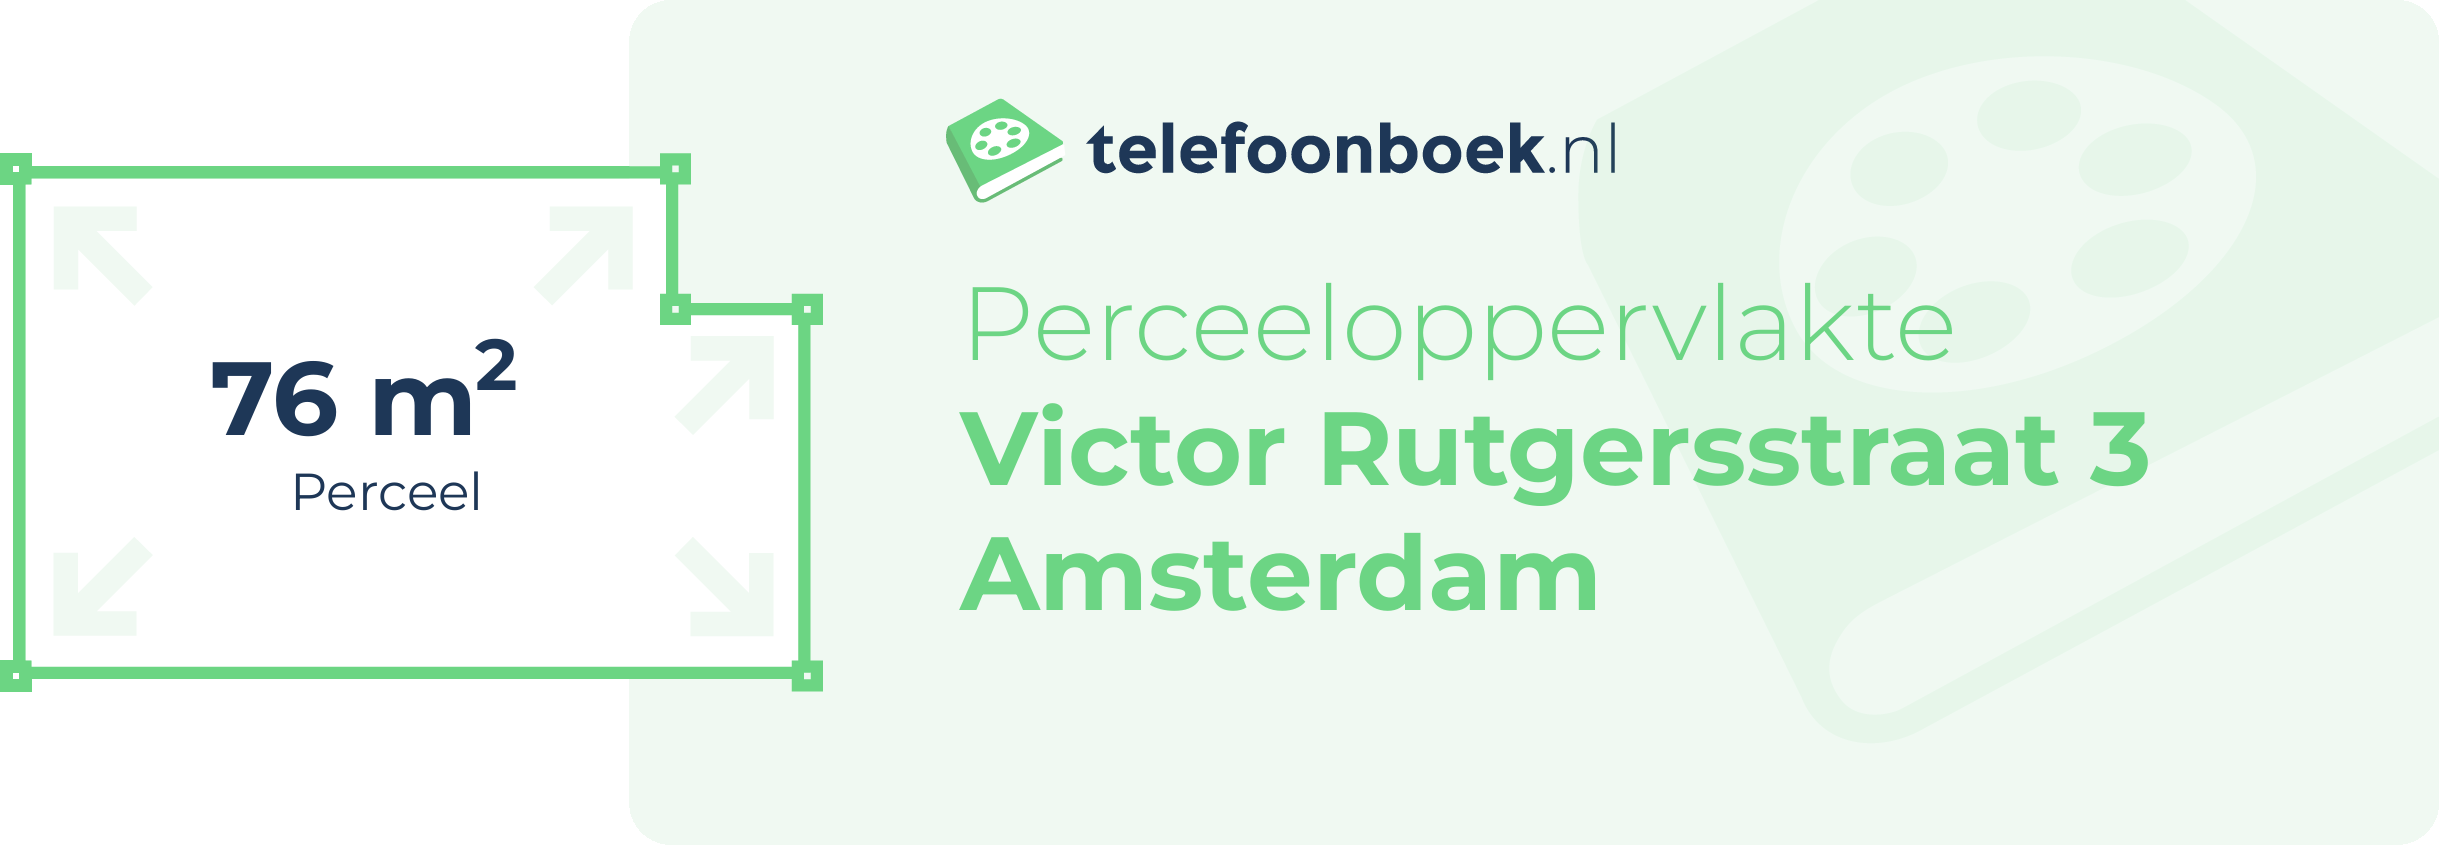 Perceeloppervlakte Victor Rutgersstraat 3 Amsterdam